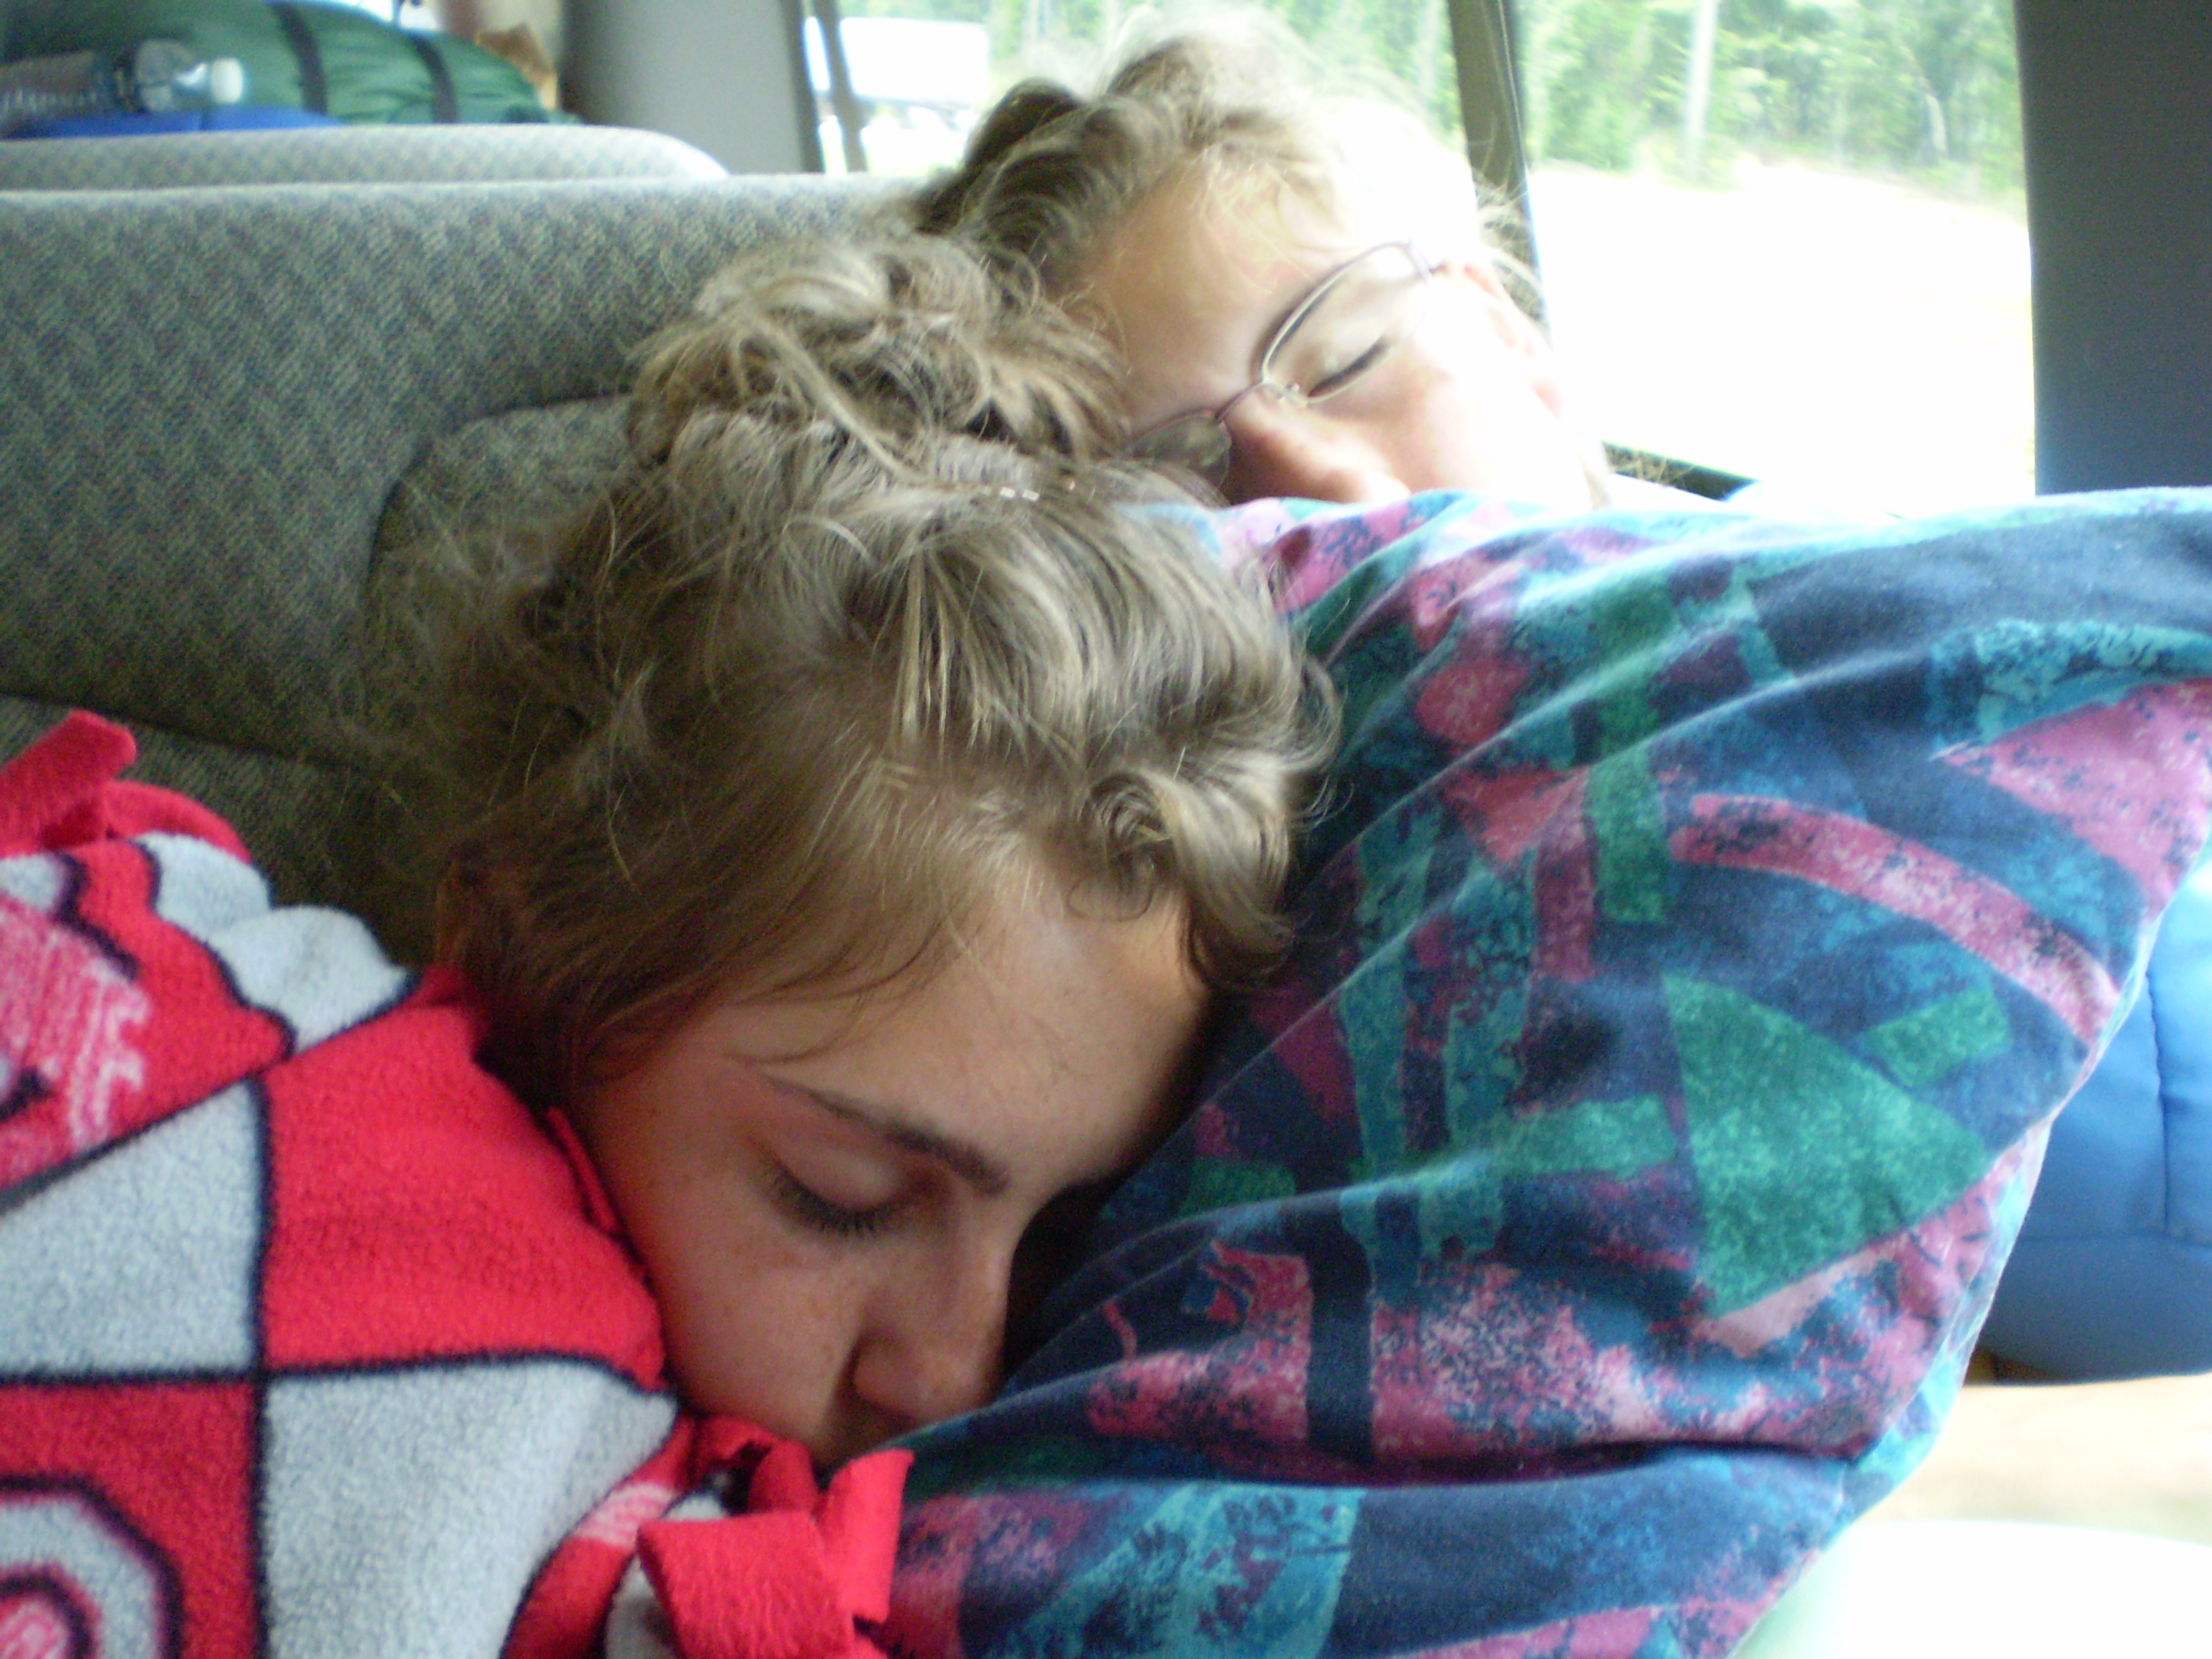 Sleeping on the van